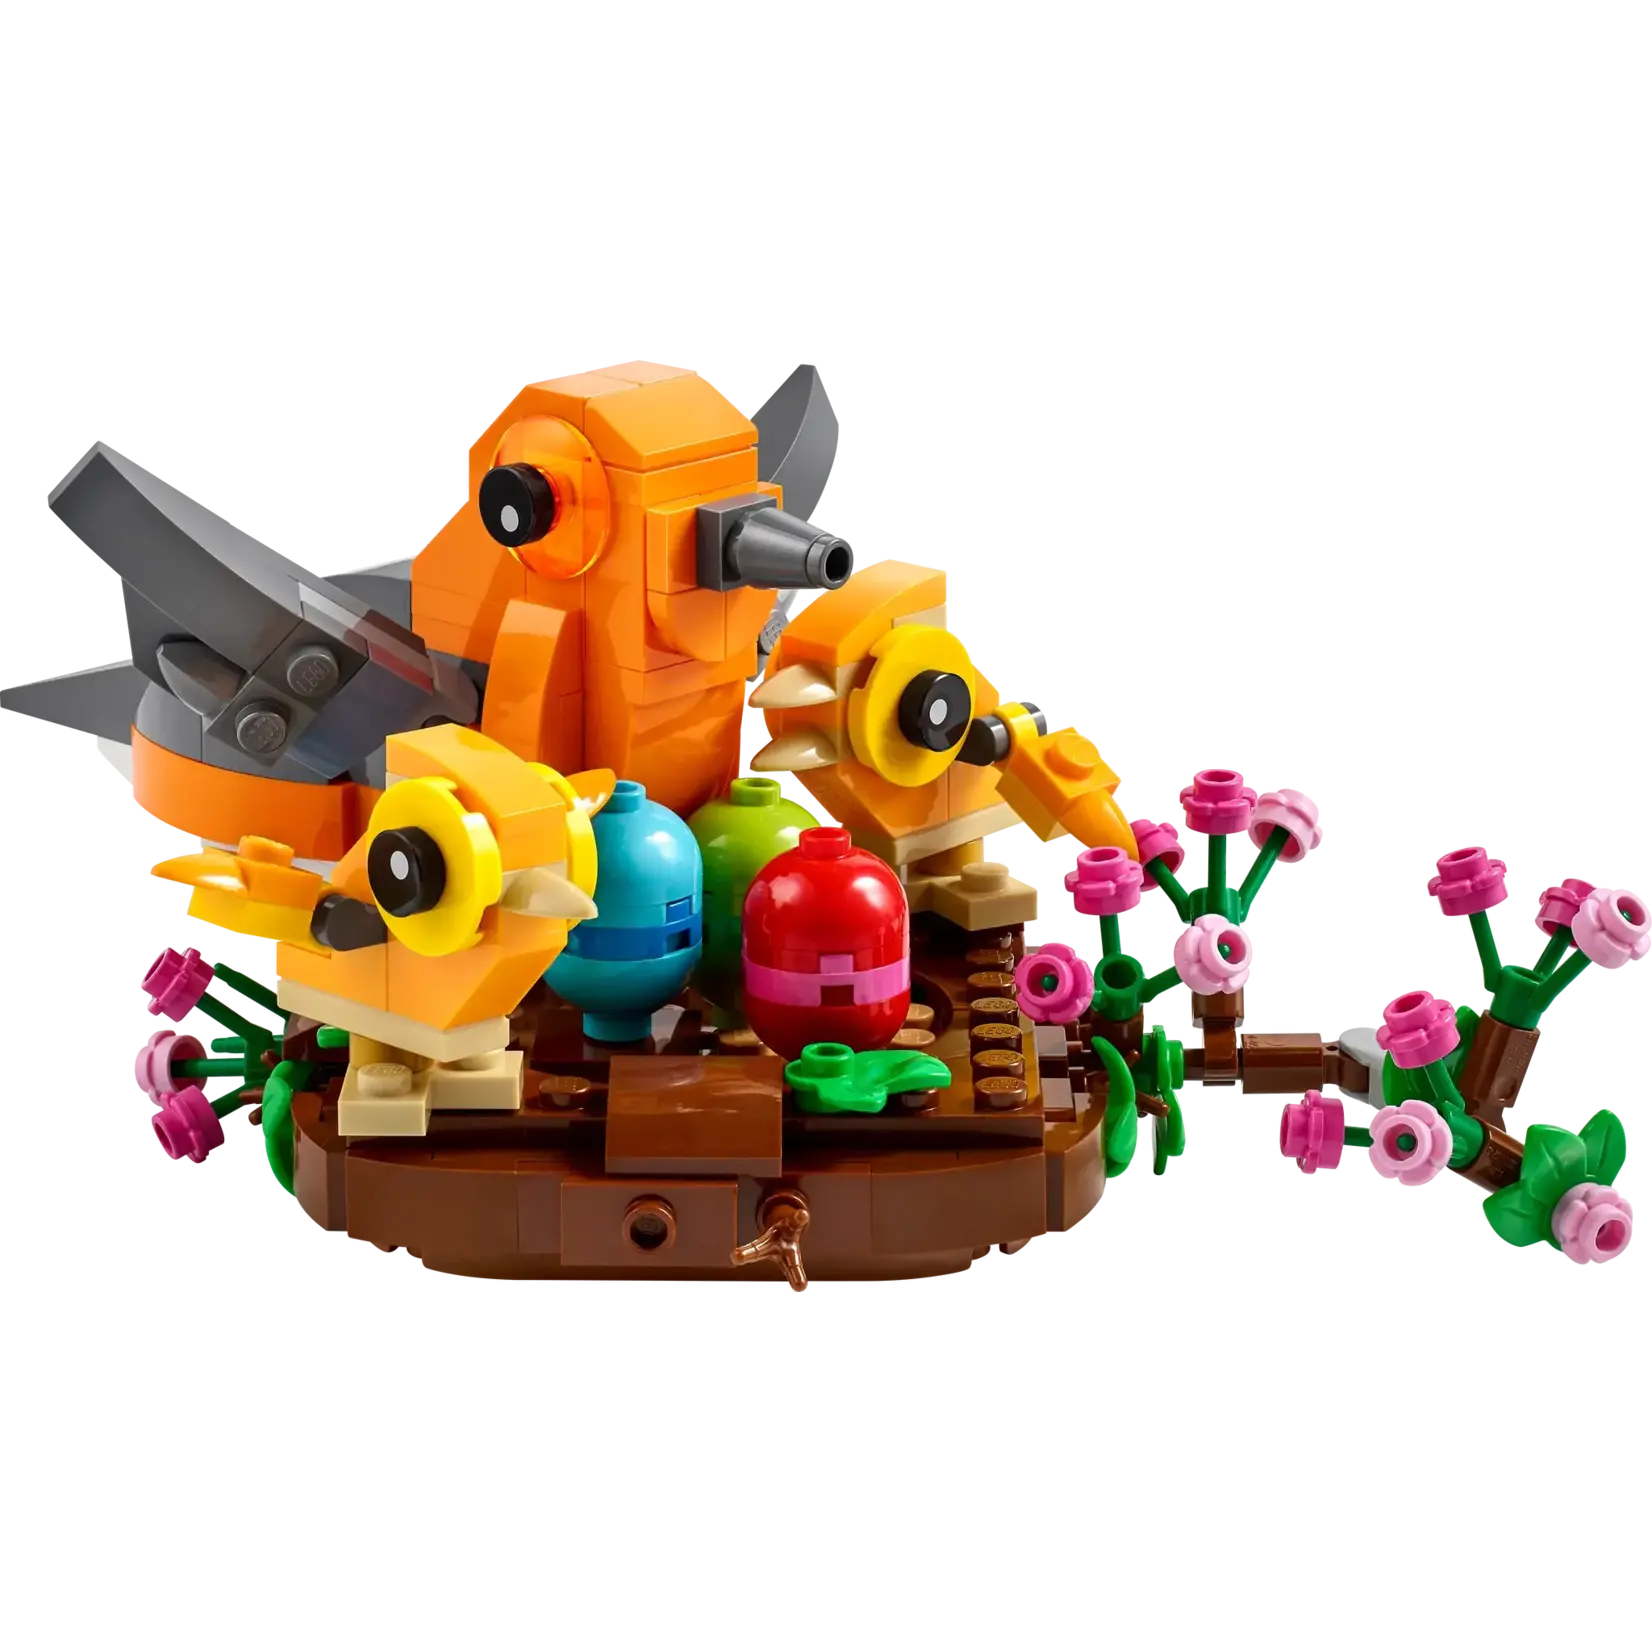 LEGO 40639 LEGO® Bird’s Nest